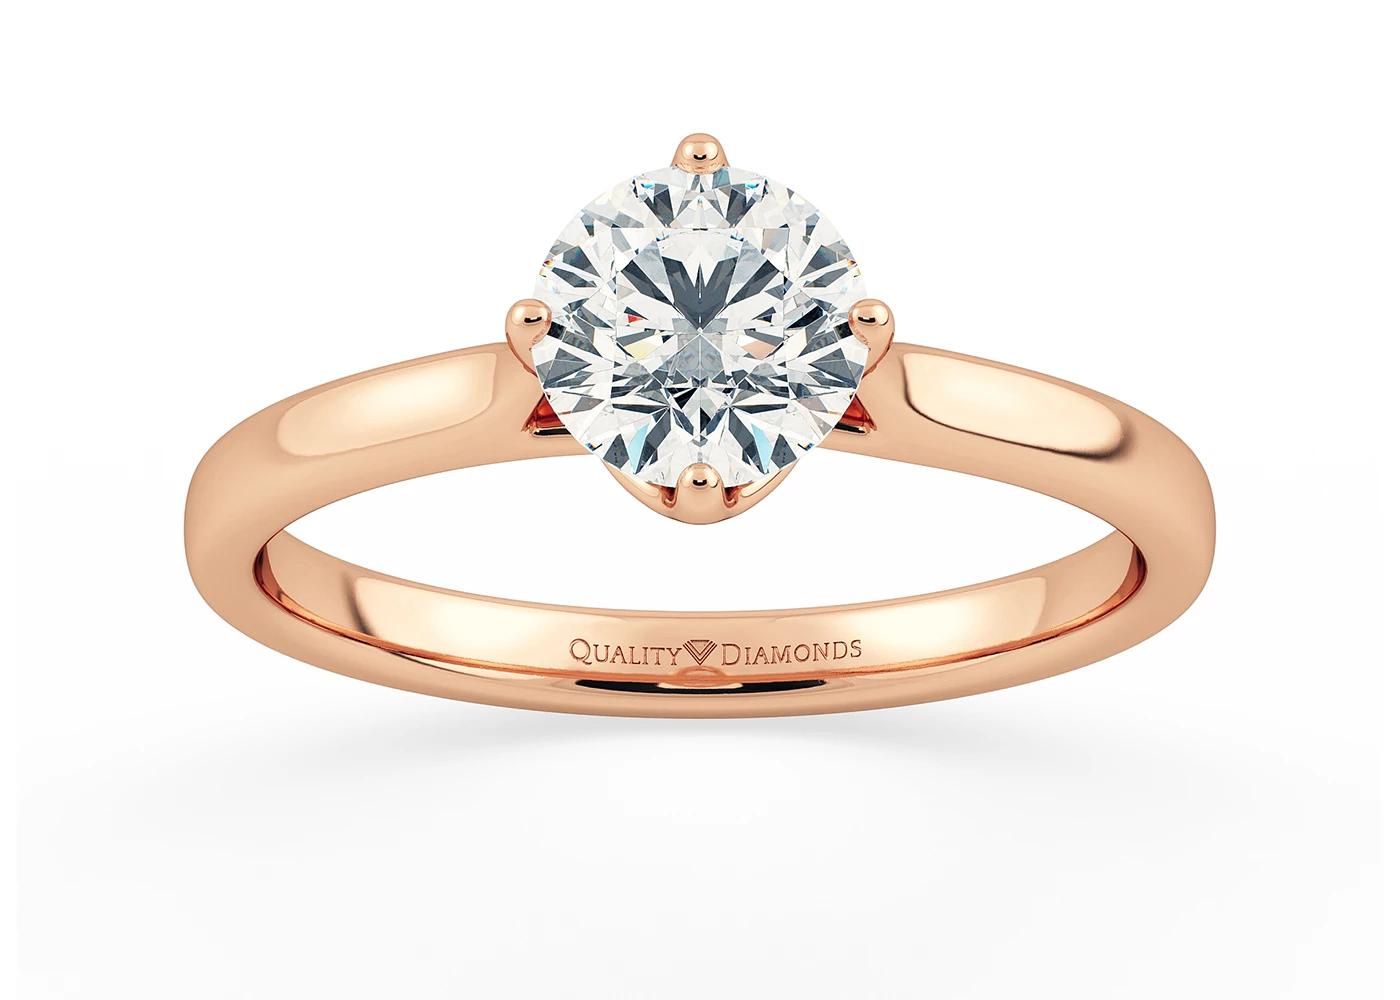 Round Brilliant Promessa Diamond Ring in 9K Rose Gold